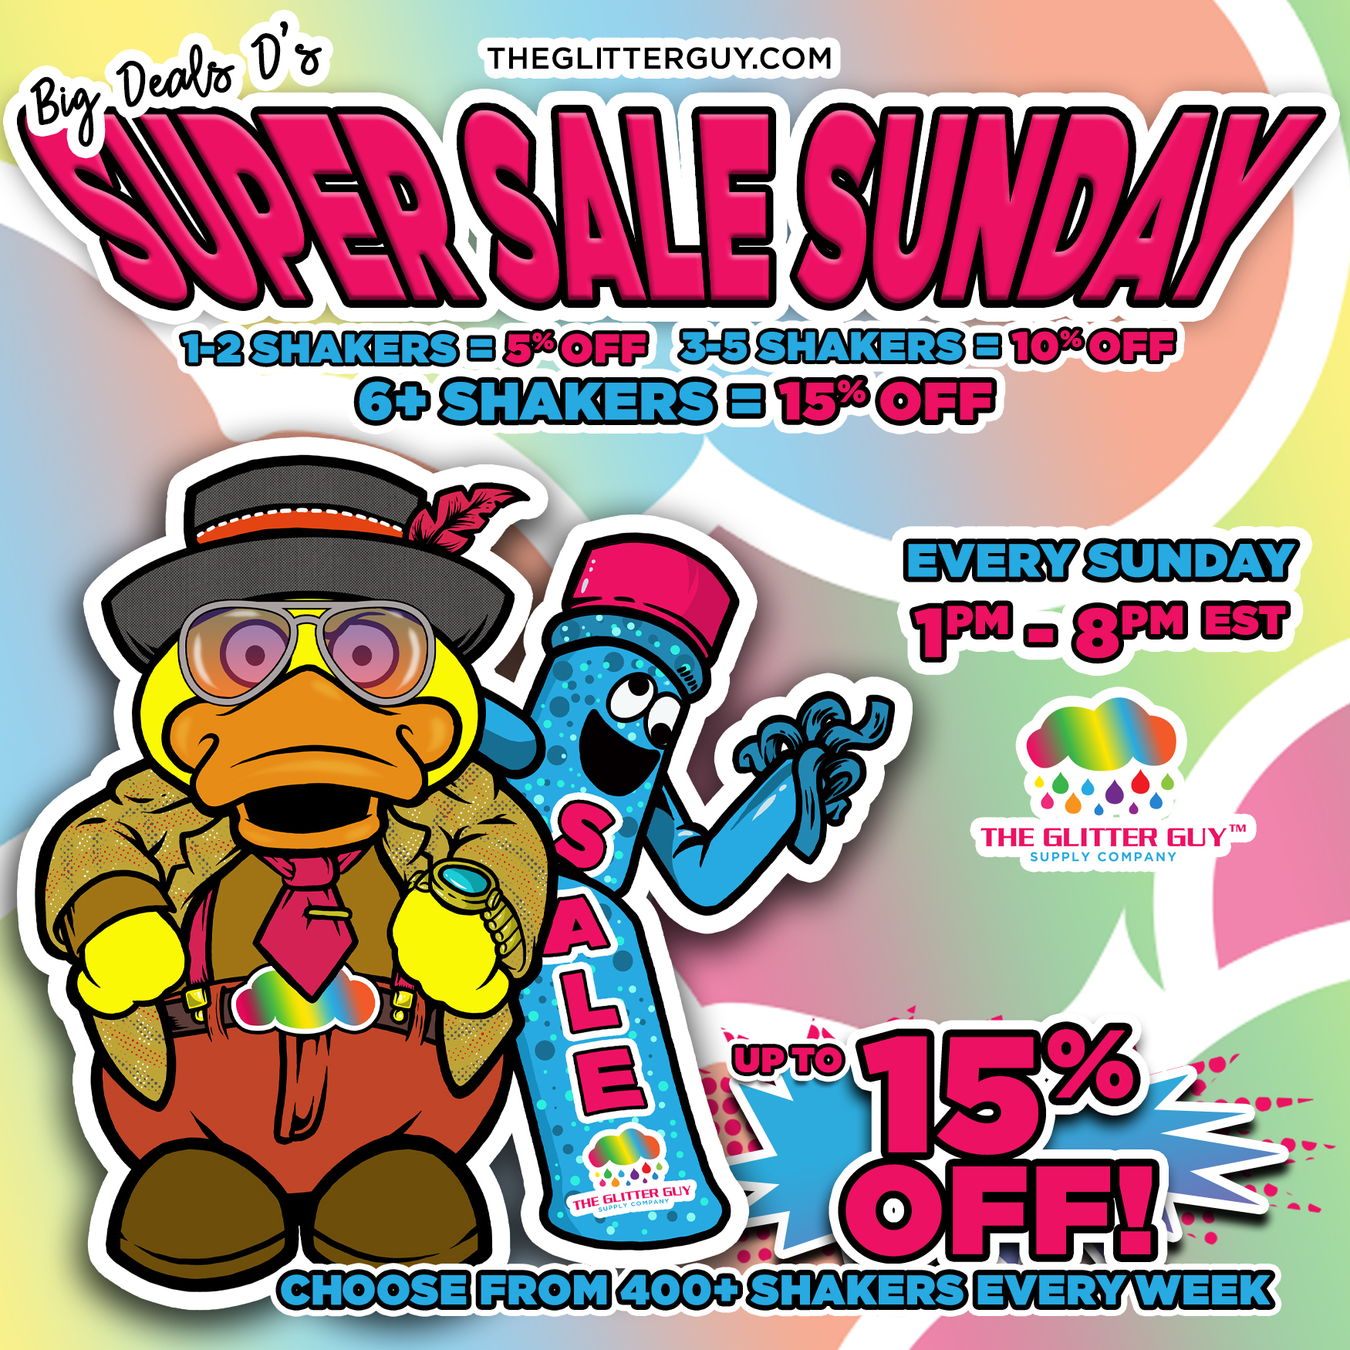 Super Sale Sunday!